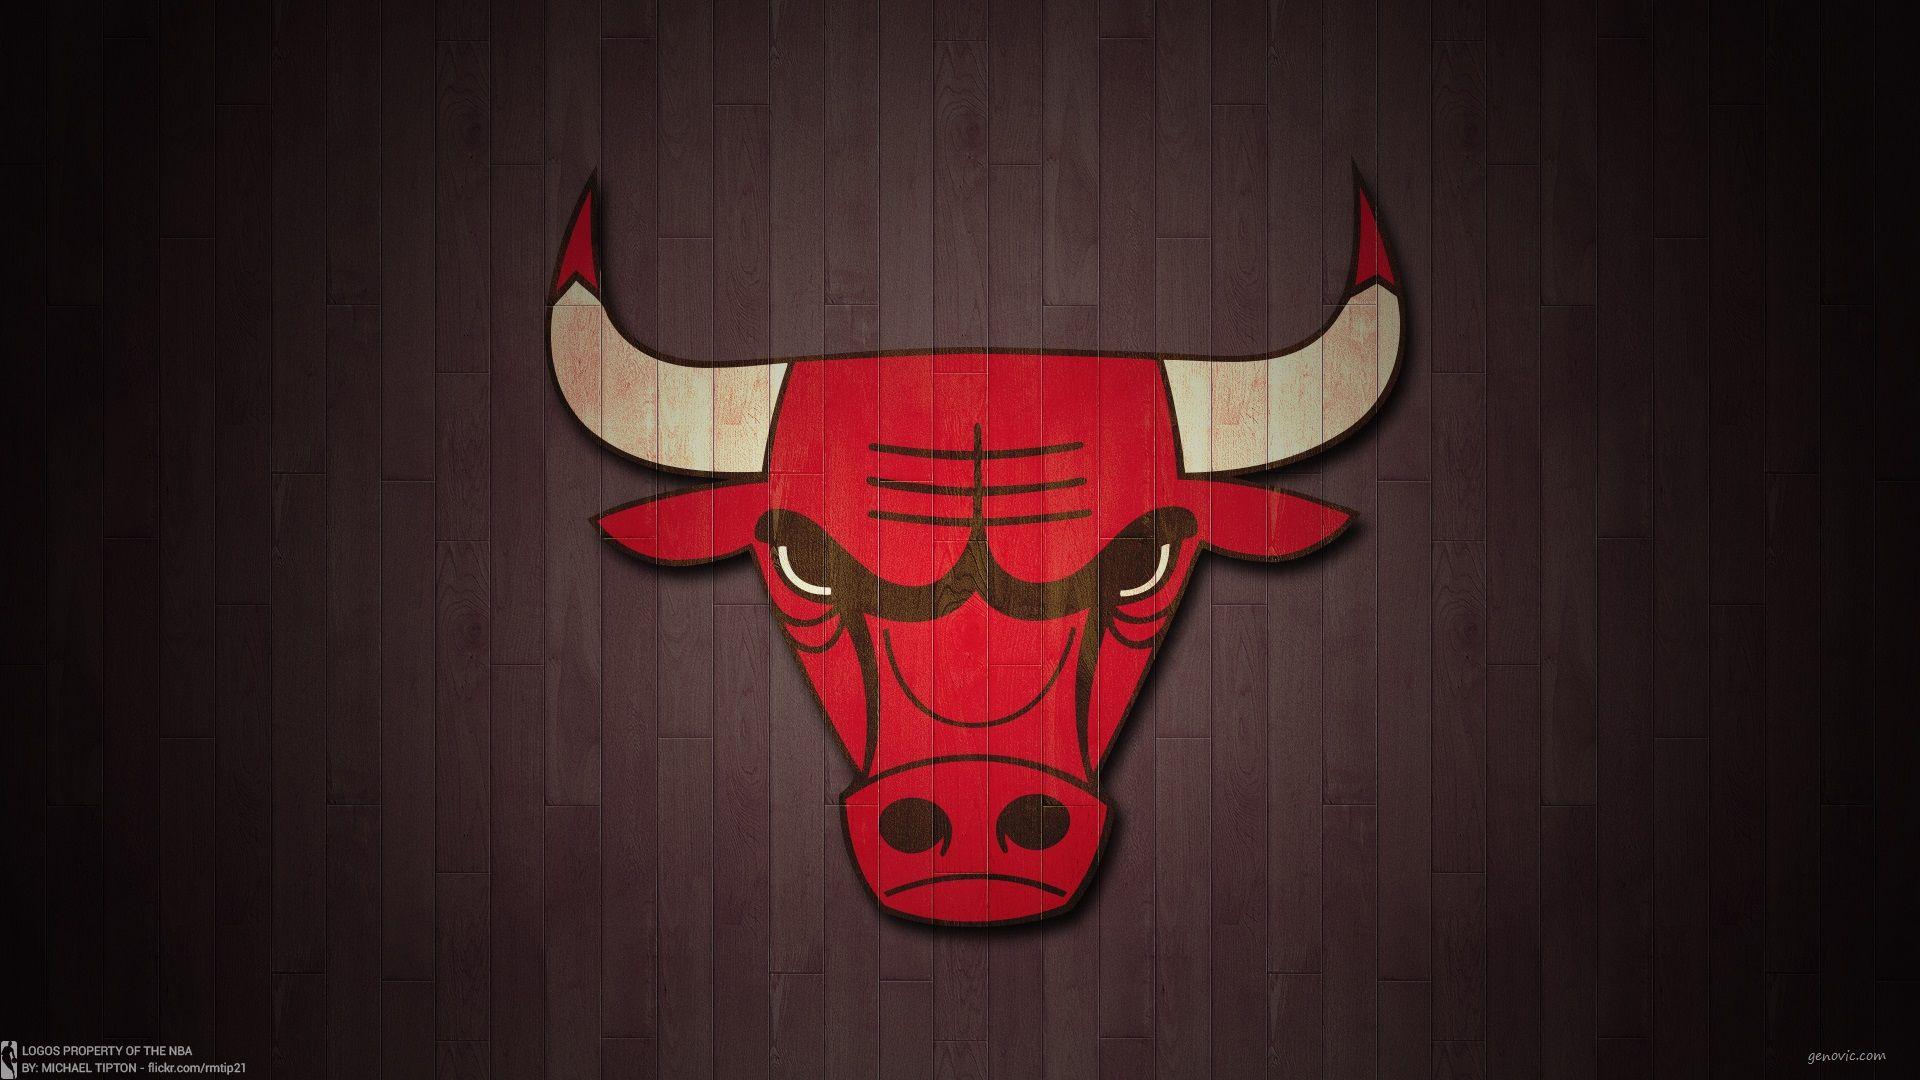 Chicago Bulls Logo Wallpaper HD for iPhone, Laptop, iPad, Mobile